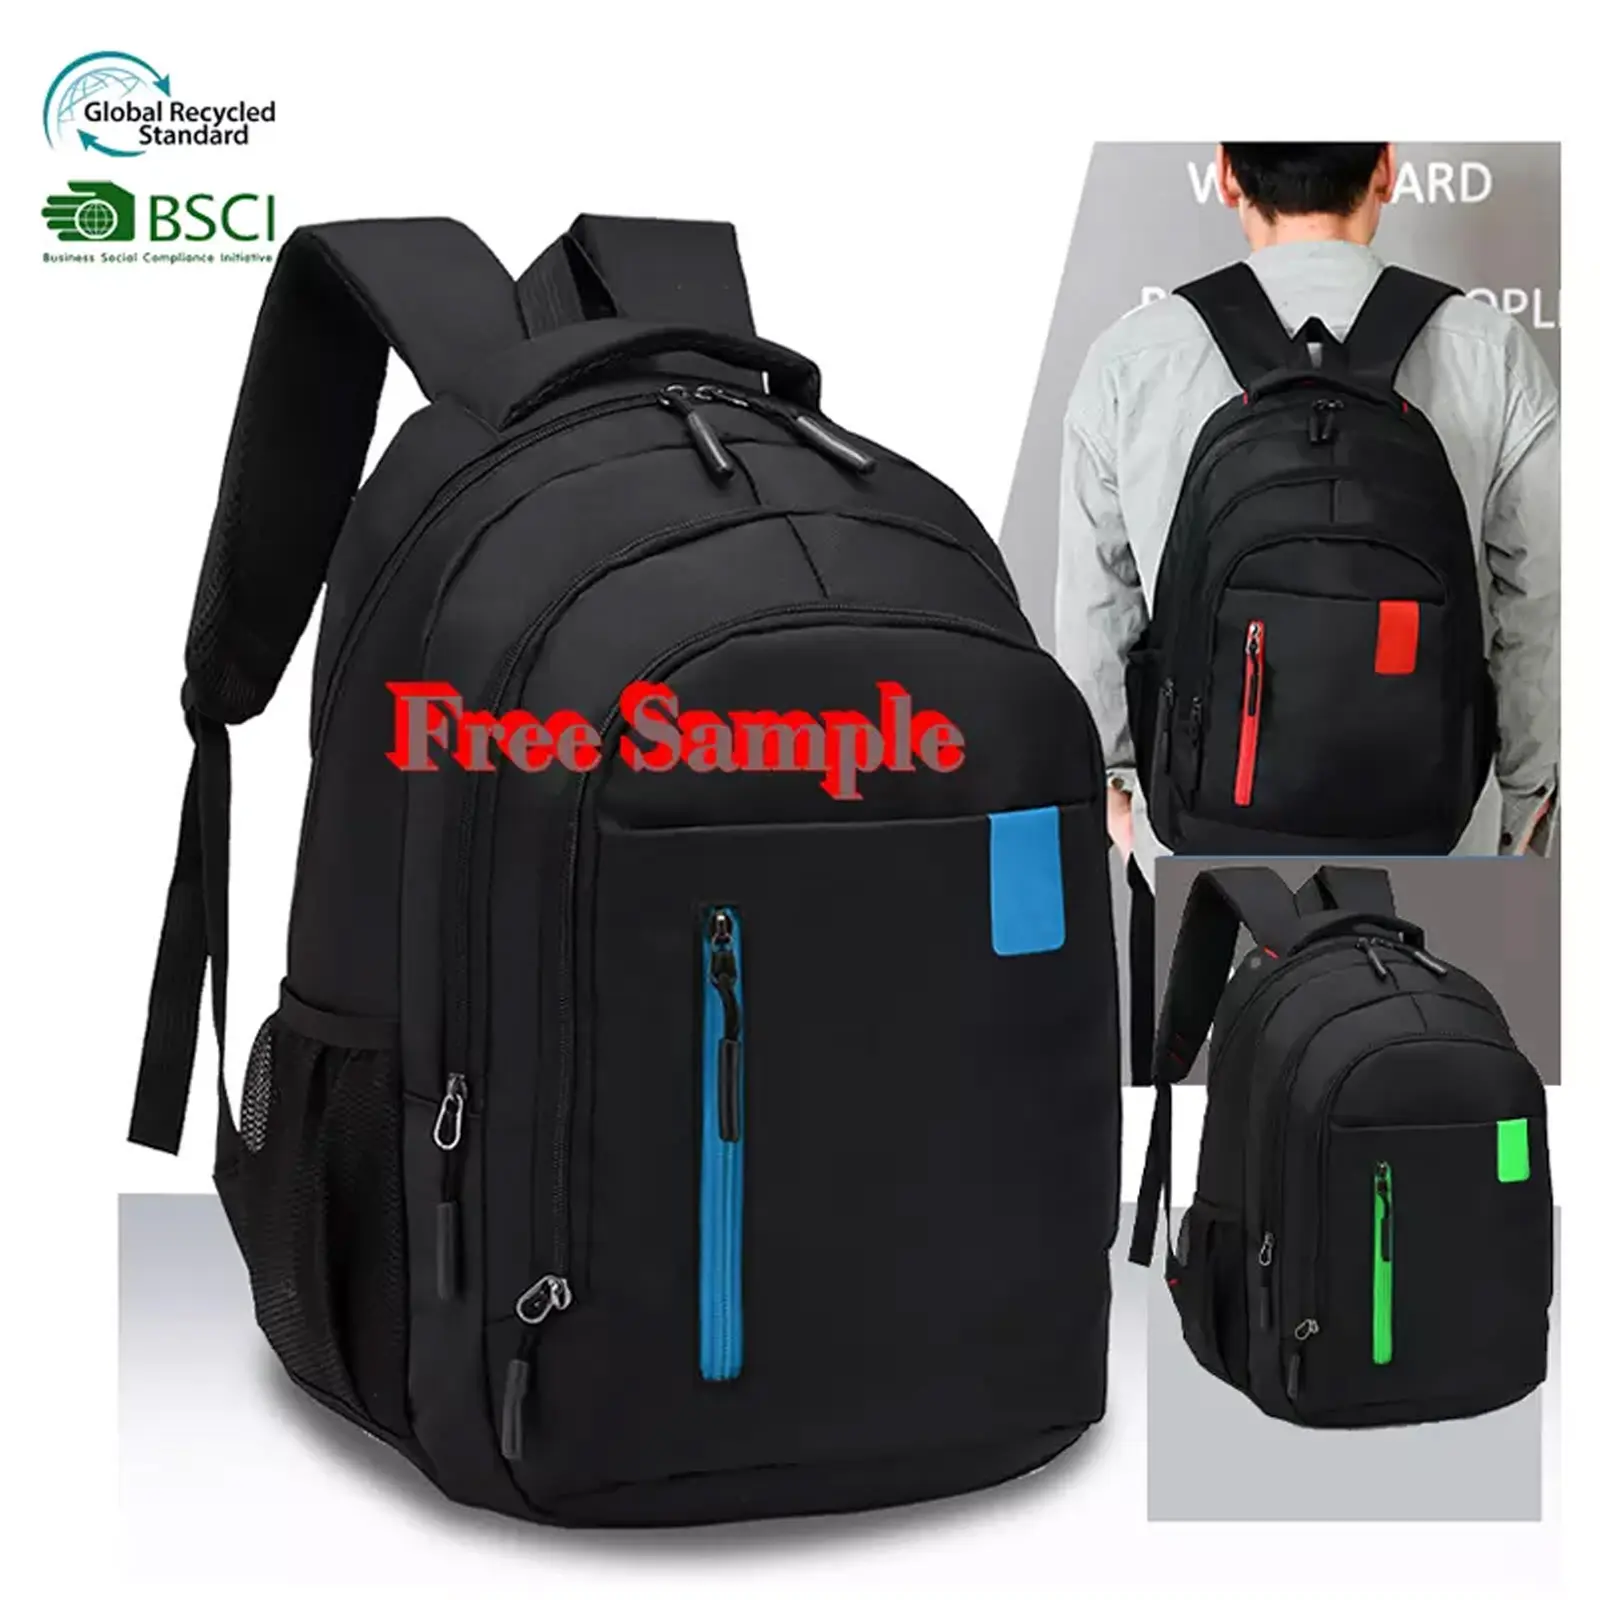 GRS BSCI Customize black back pack schoolbag Waterproof computer Backpack mochila Bookbags bag school for student